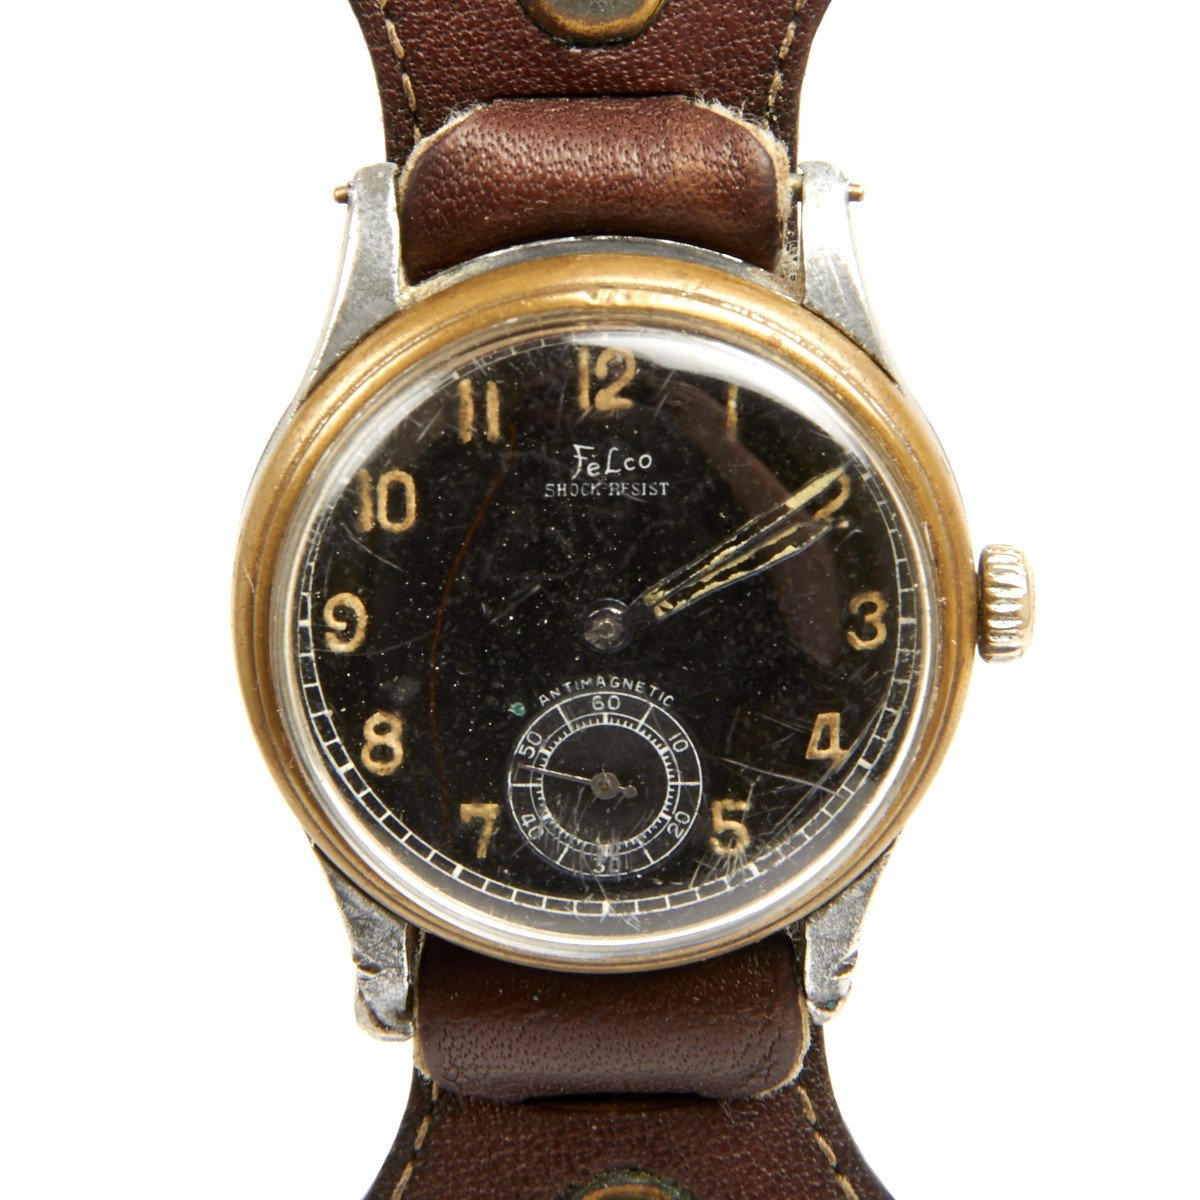 Original German WWII Luftwaffe Wrist Watch by Felco - Fully Functional ...